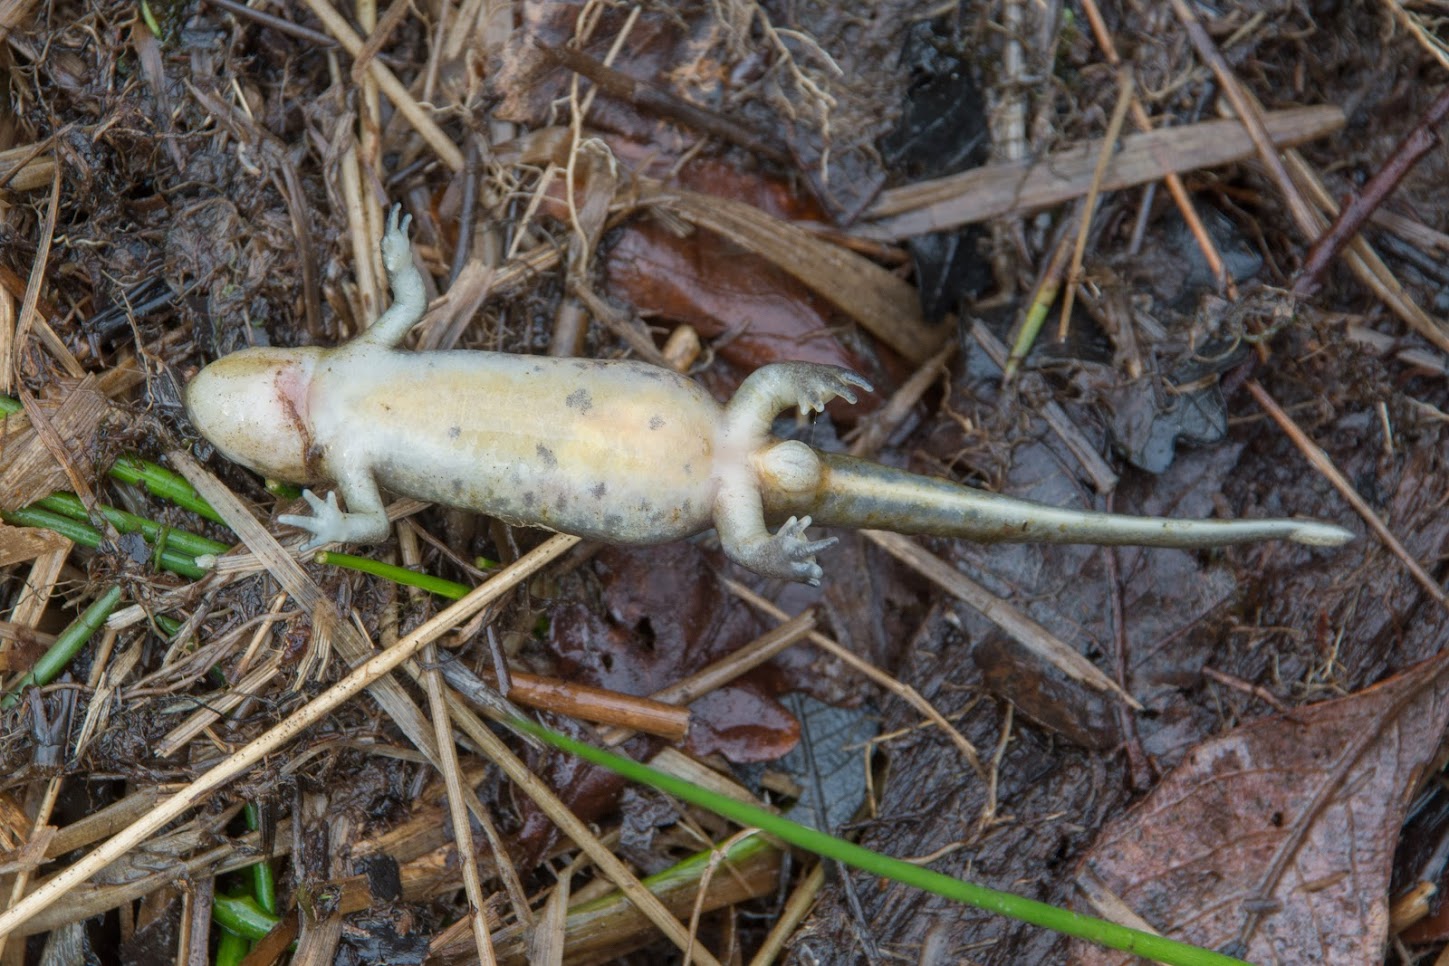 Photo 1 / 2 - Gillian_Pullinger: Photos of Dead Palmate Newts Spring Freeze (FFA), Mar 2018